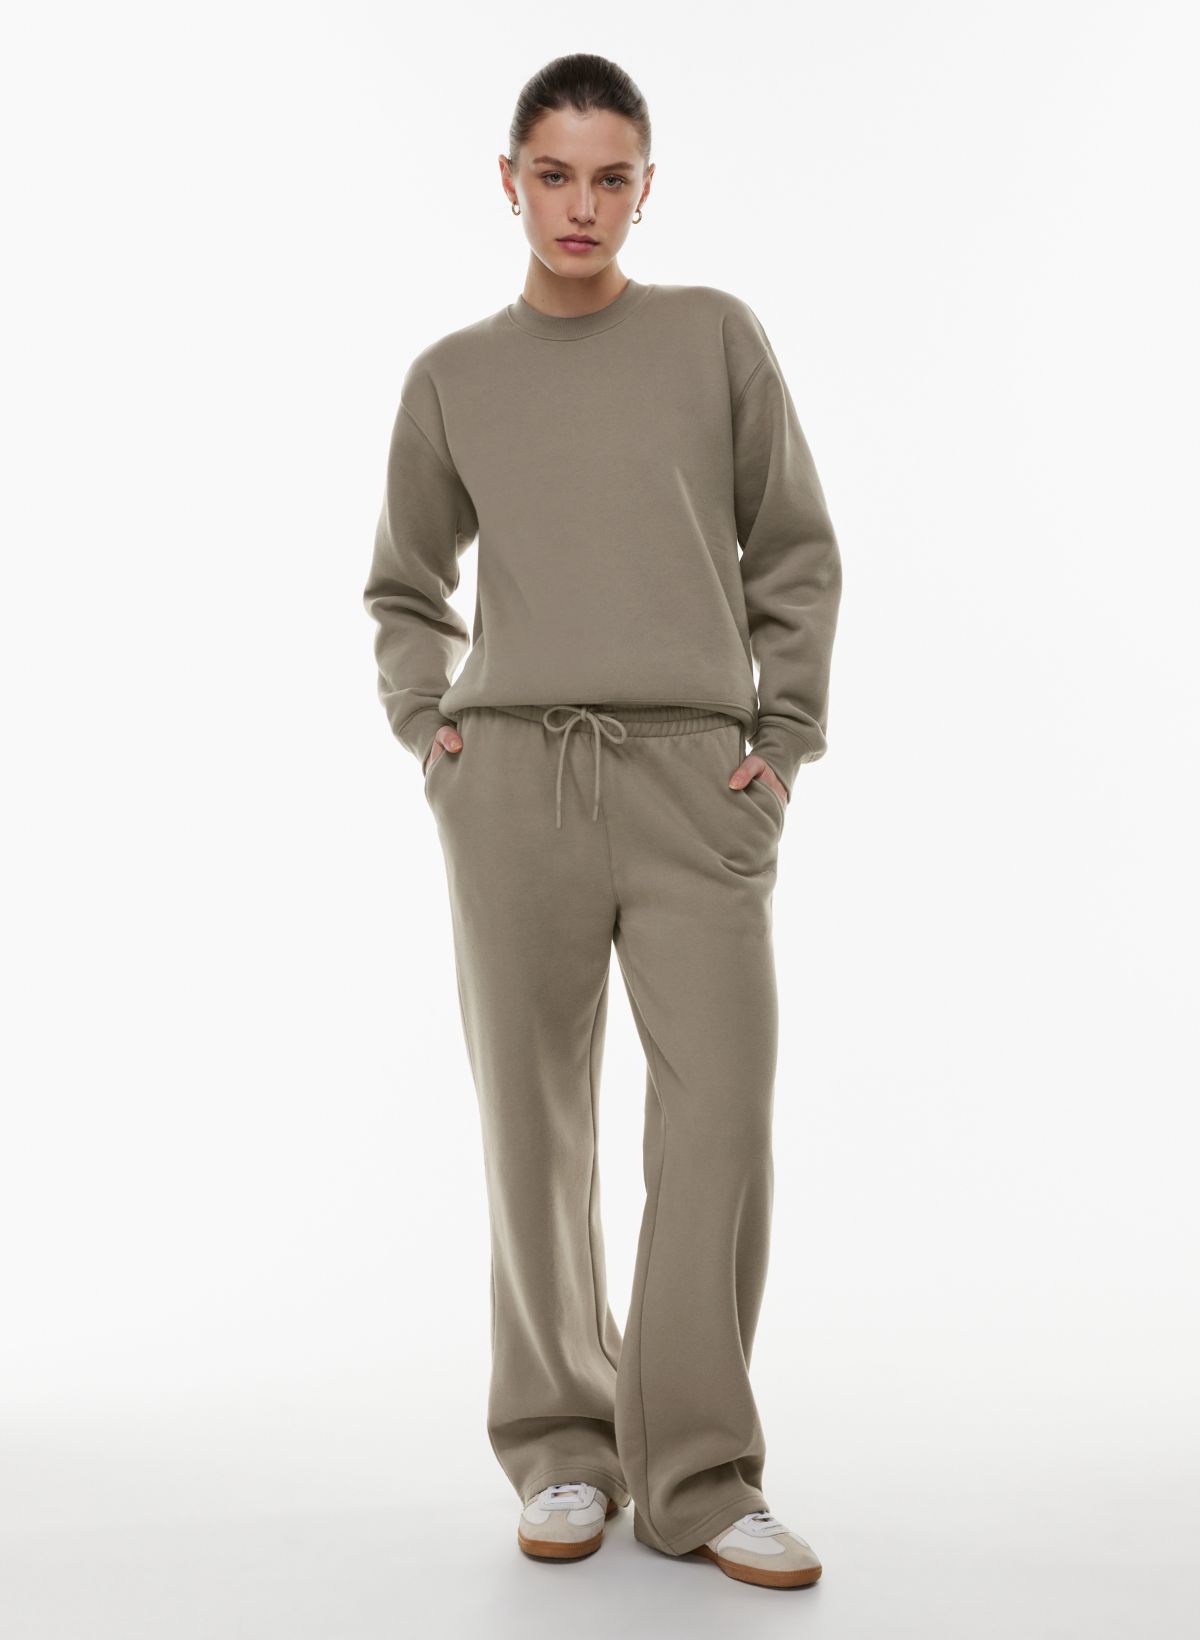 Carly Grey Jogger Pants  Black sleeveless crop top, Grey joggers